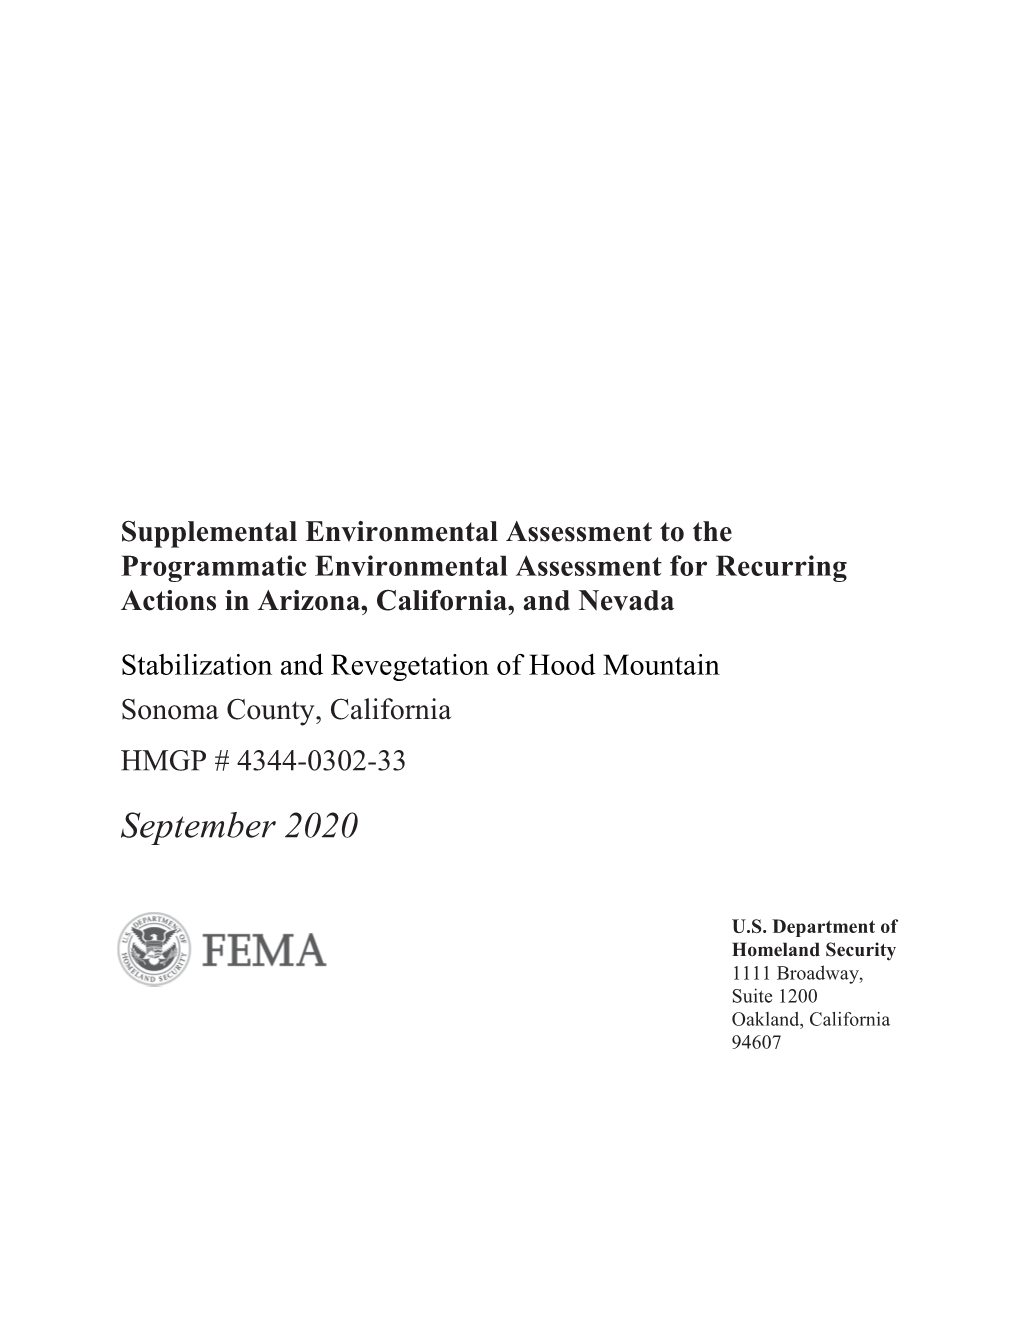 Environmental Assessment for Sonoma County, CA